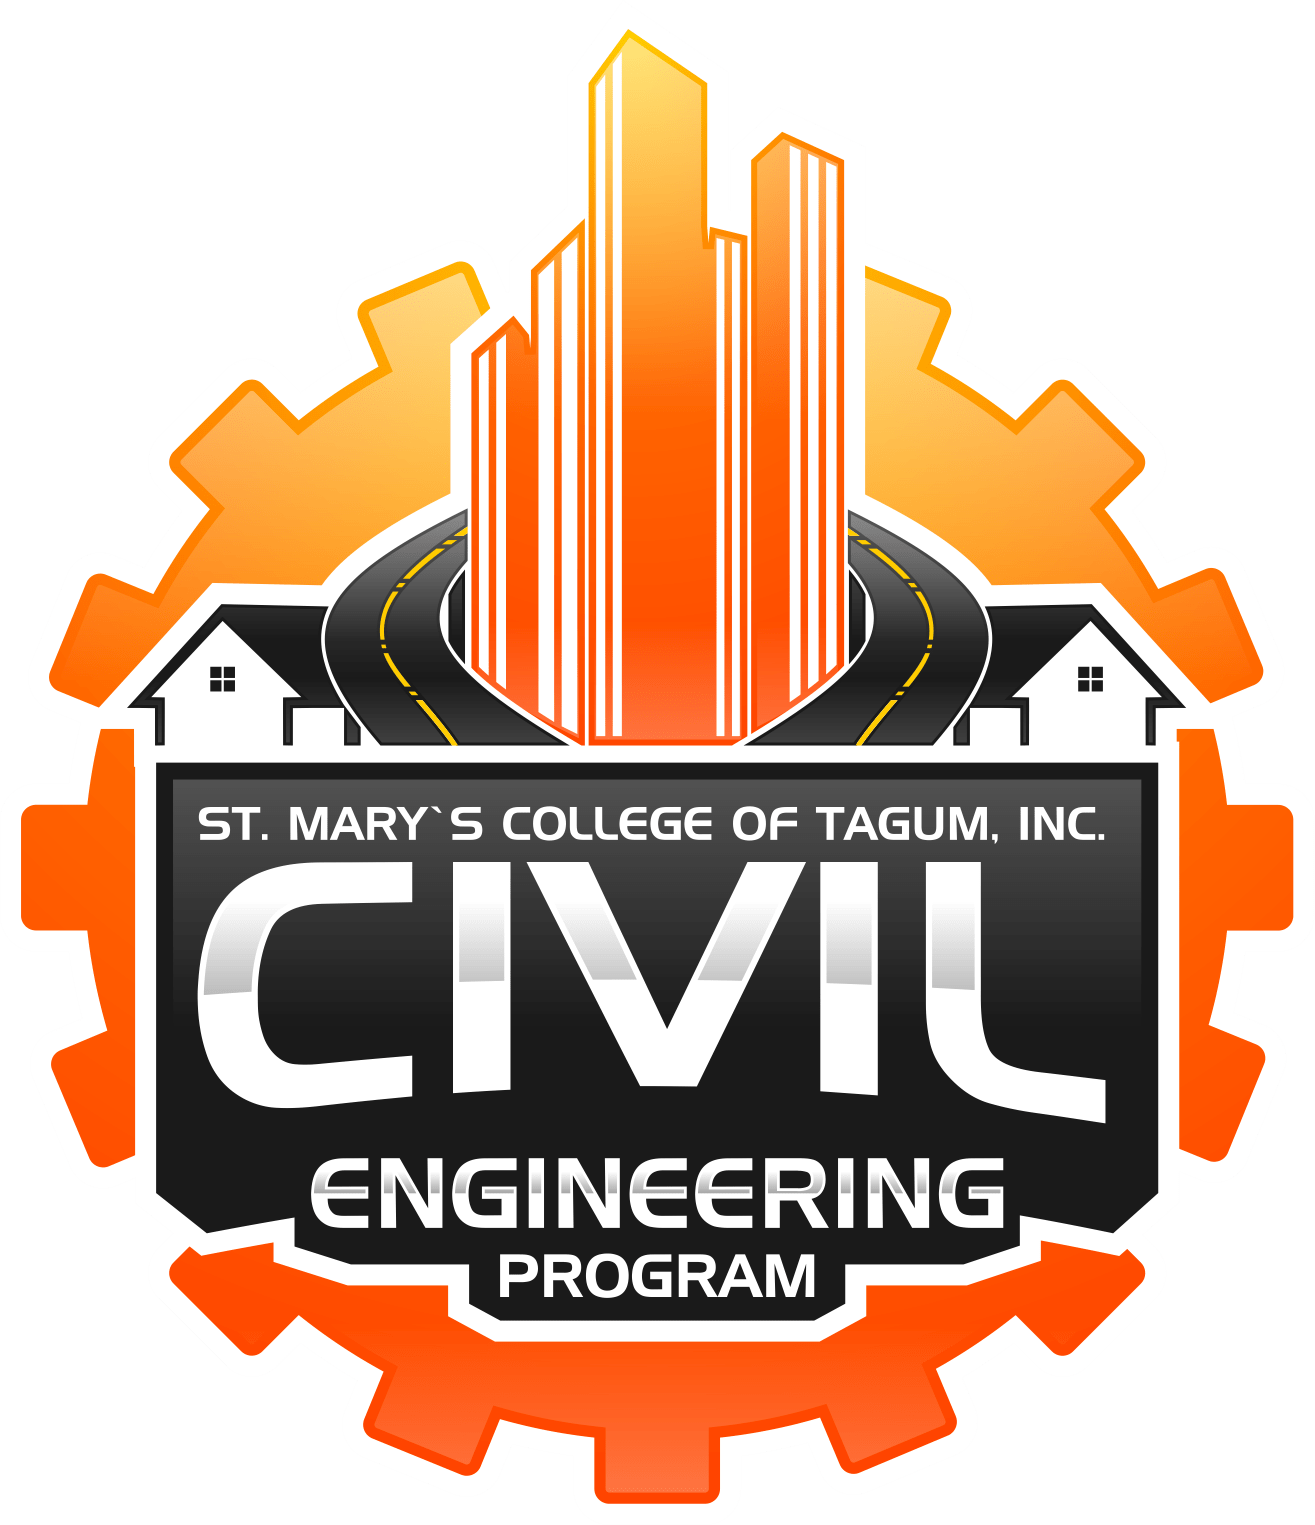 Civil Engineering Program – St. Mary's College of Tagum, Inc.